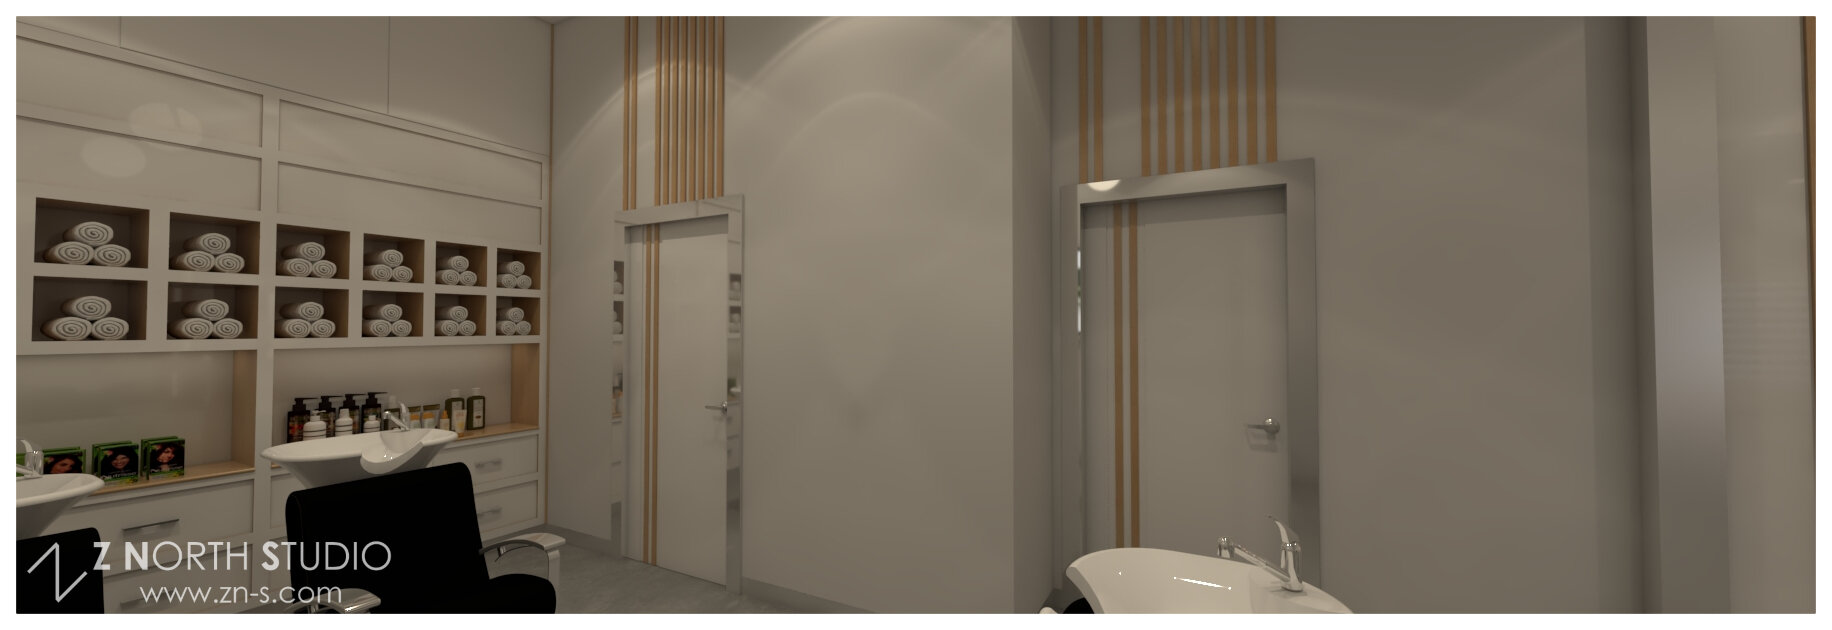 #steamroom #sauna #wellness #spa #shower #interiordesign #bathroom #luxurybathroom (1).jpg